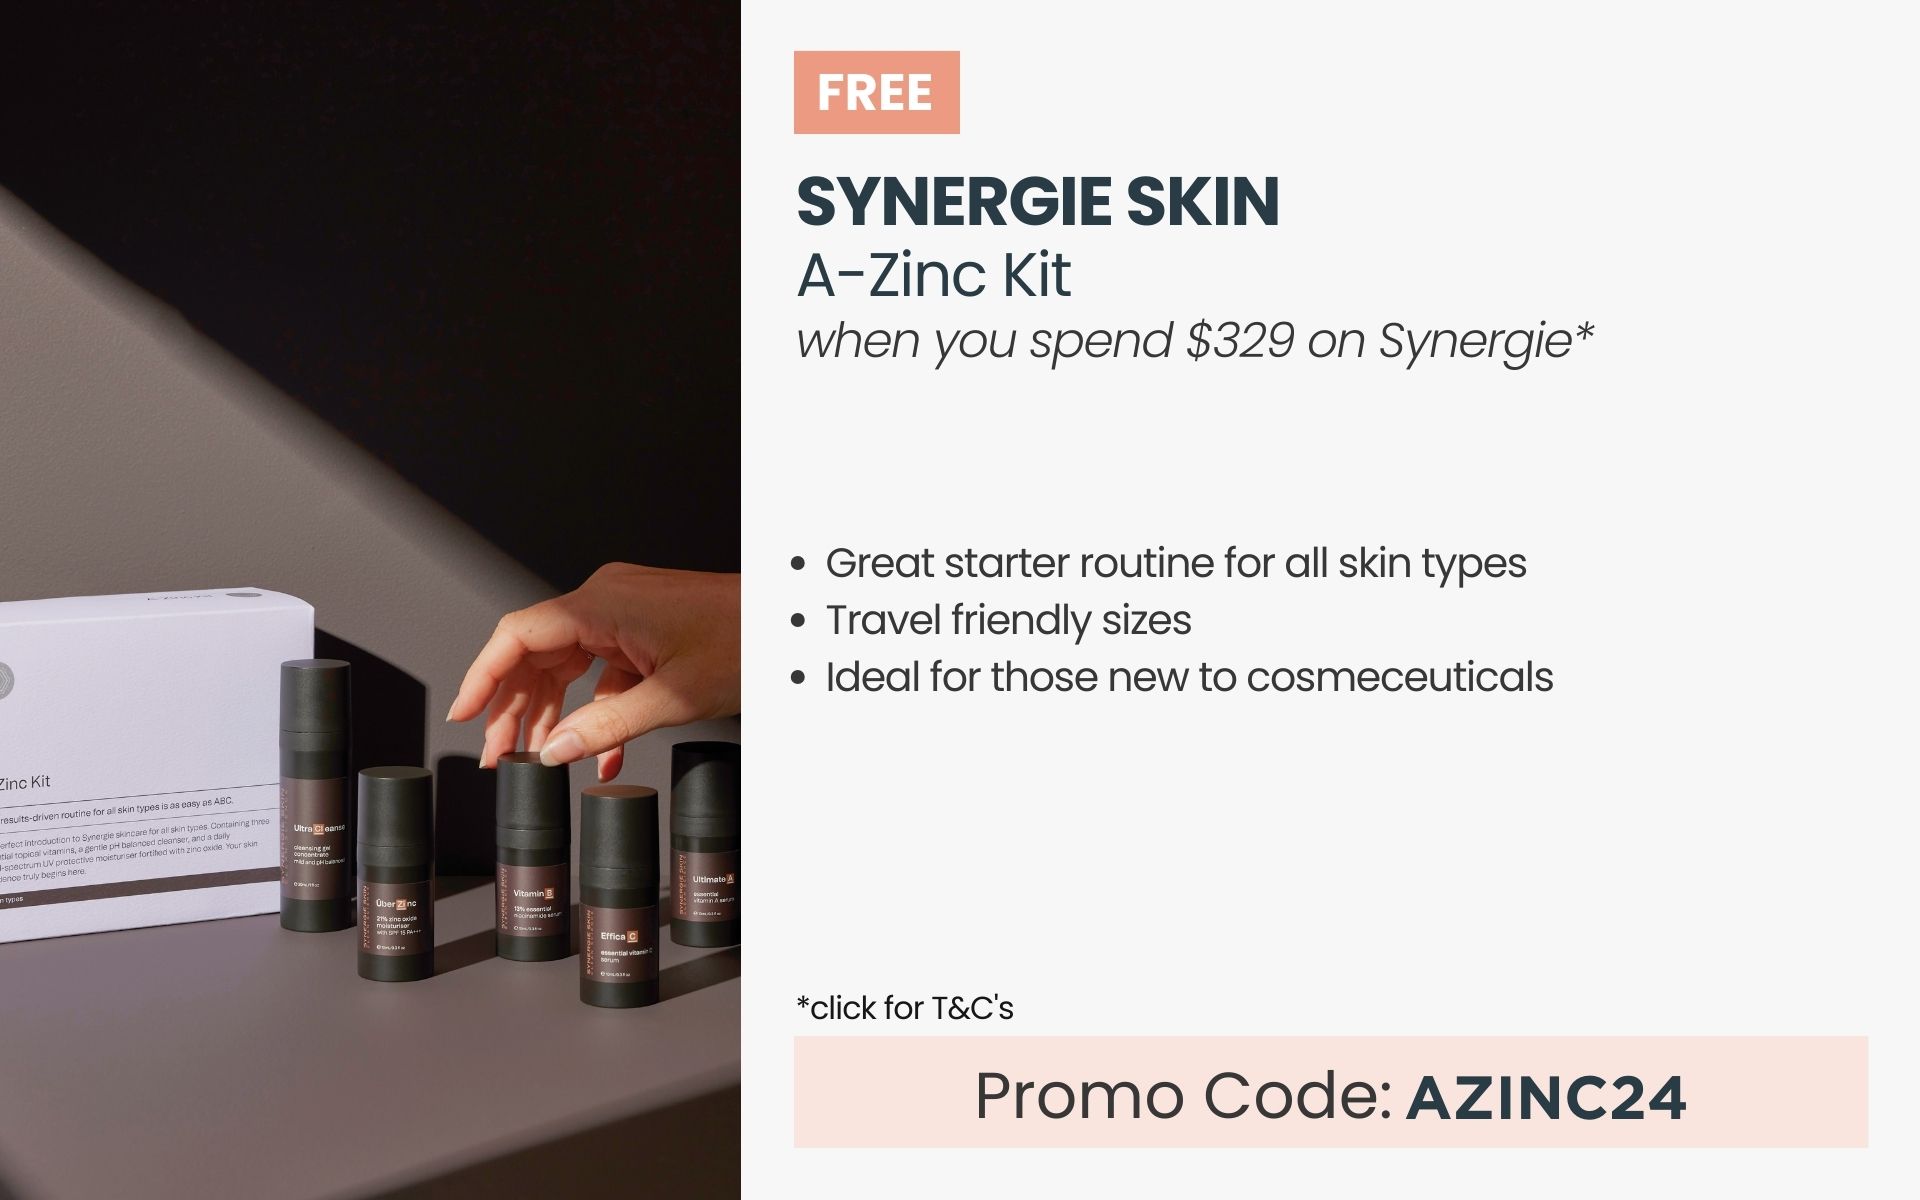 FREE Synergie Skin A-Zinc Kit30ml worth $150. Min spend $329 on Synergie. Promo Code: AZINC24.